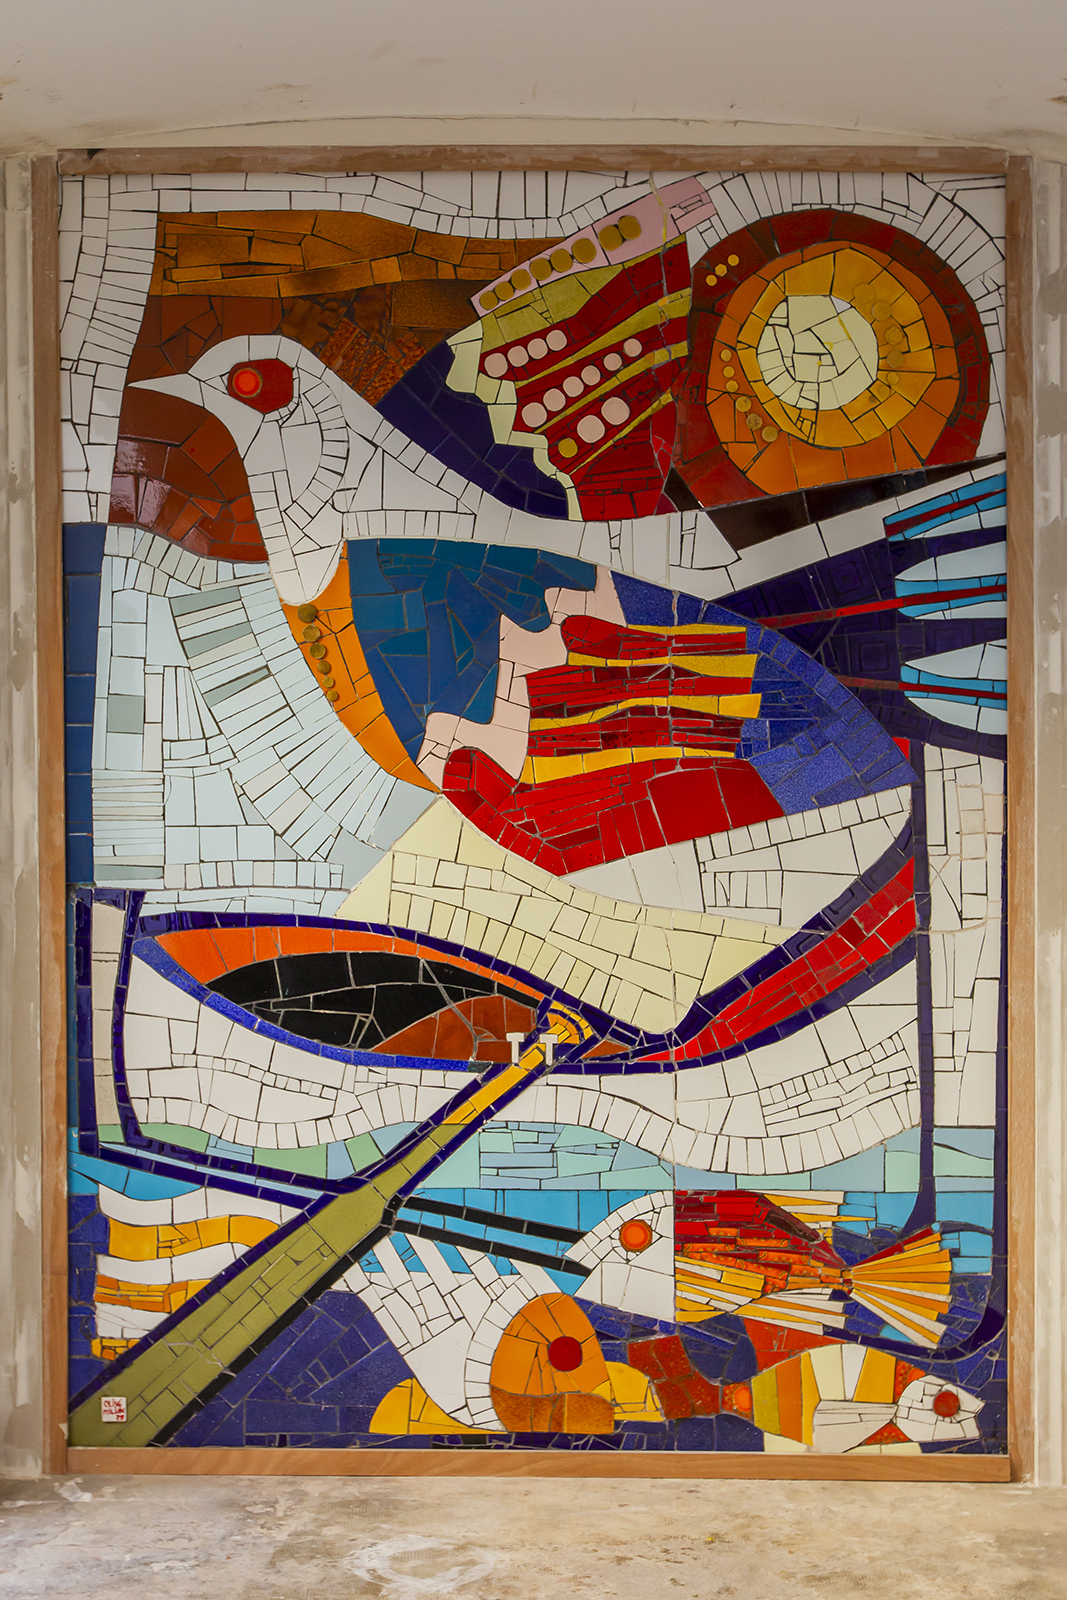 Espai 13 - Mosaic restaurat d'Armand Oliv Milian